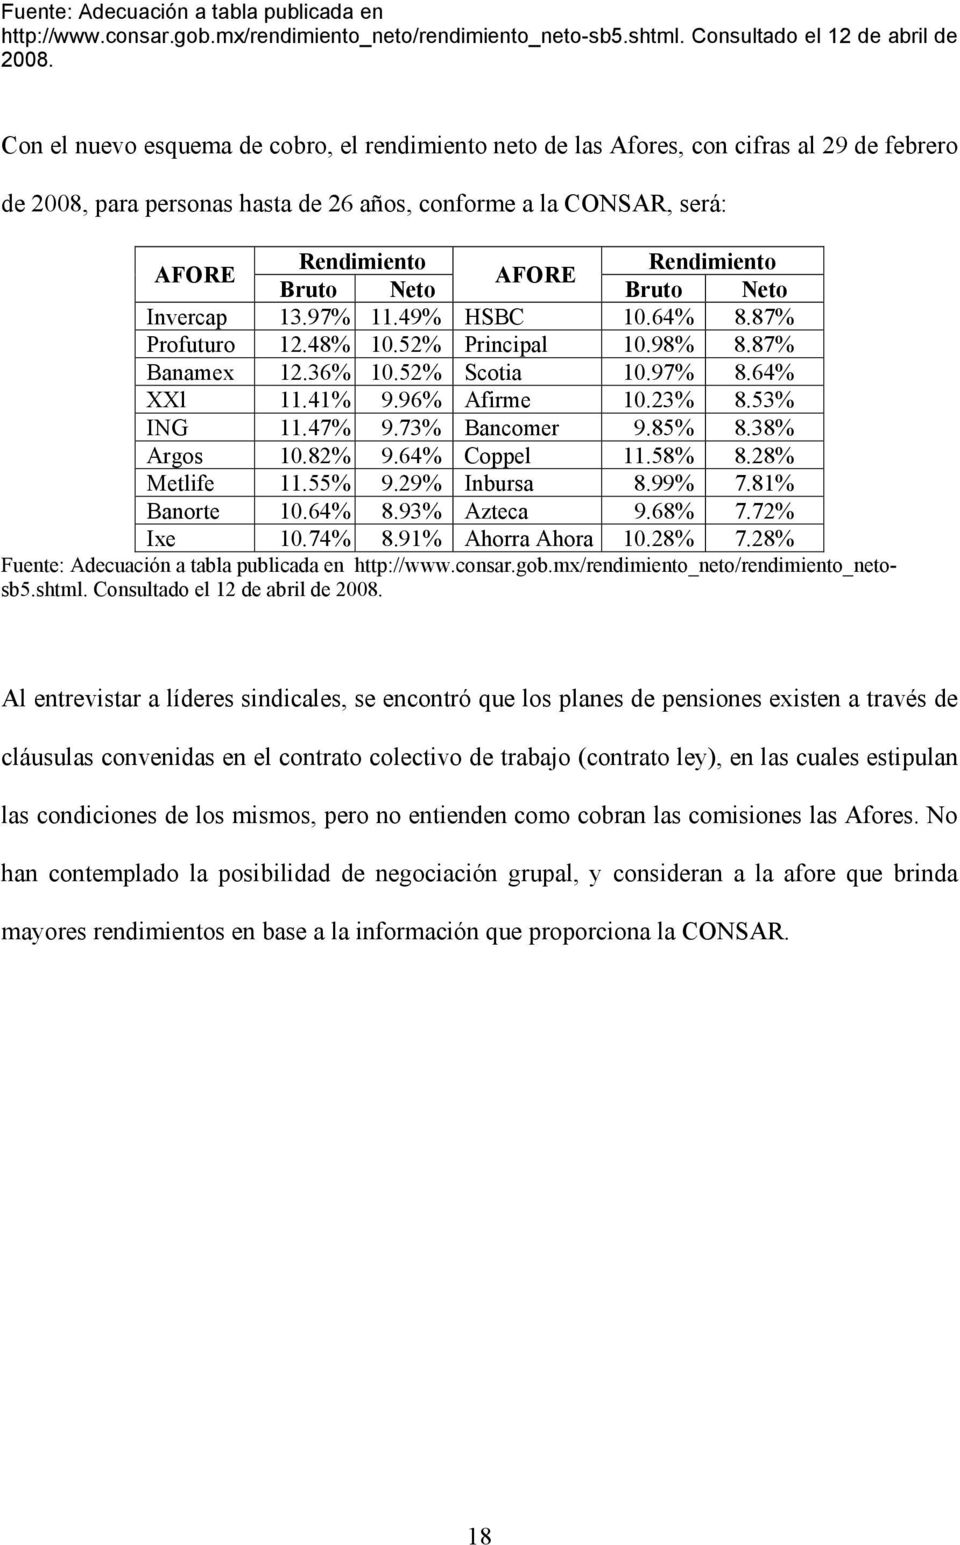 Bruto Neto Bruto Neto Invercap 13.97% 11.49% HSBC 10.64% 8.87% Profuturo 12.48% 10.52% Principal 10.98% 8.87% Banamex 12.36% 10.52% Scotia 10.97% 8.64% XXl 11.41% 9.96% Afirme 10.23% 8.53% ING 11.